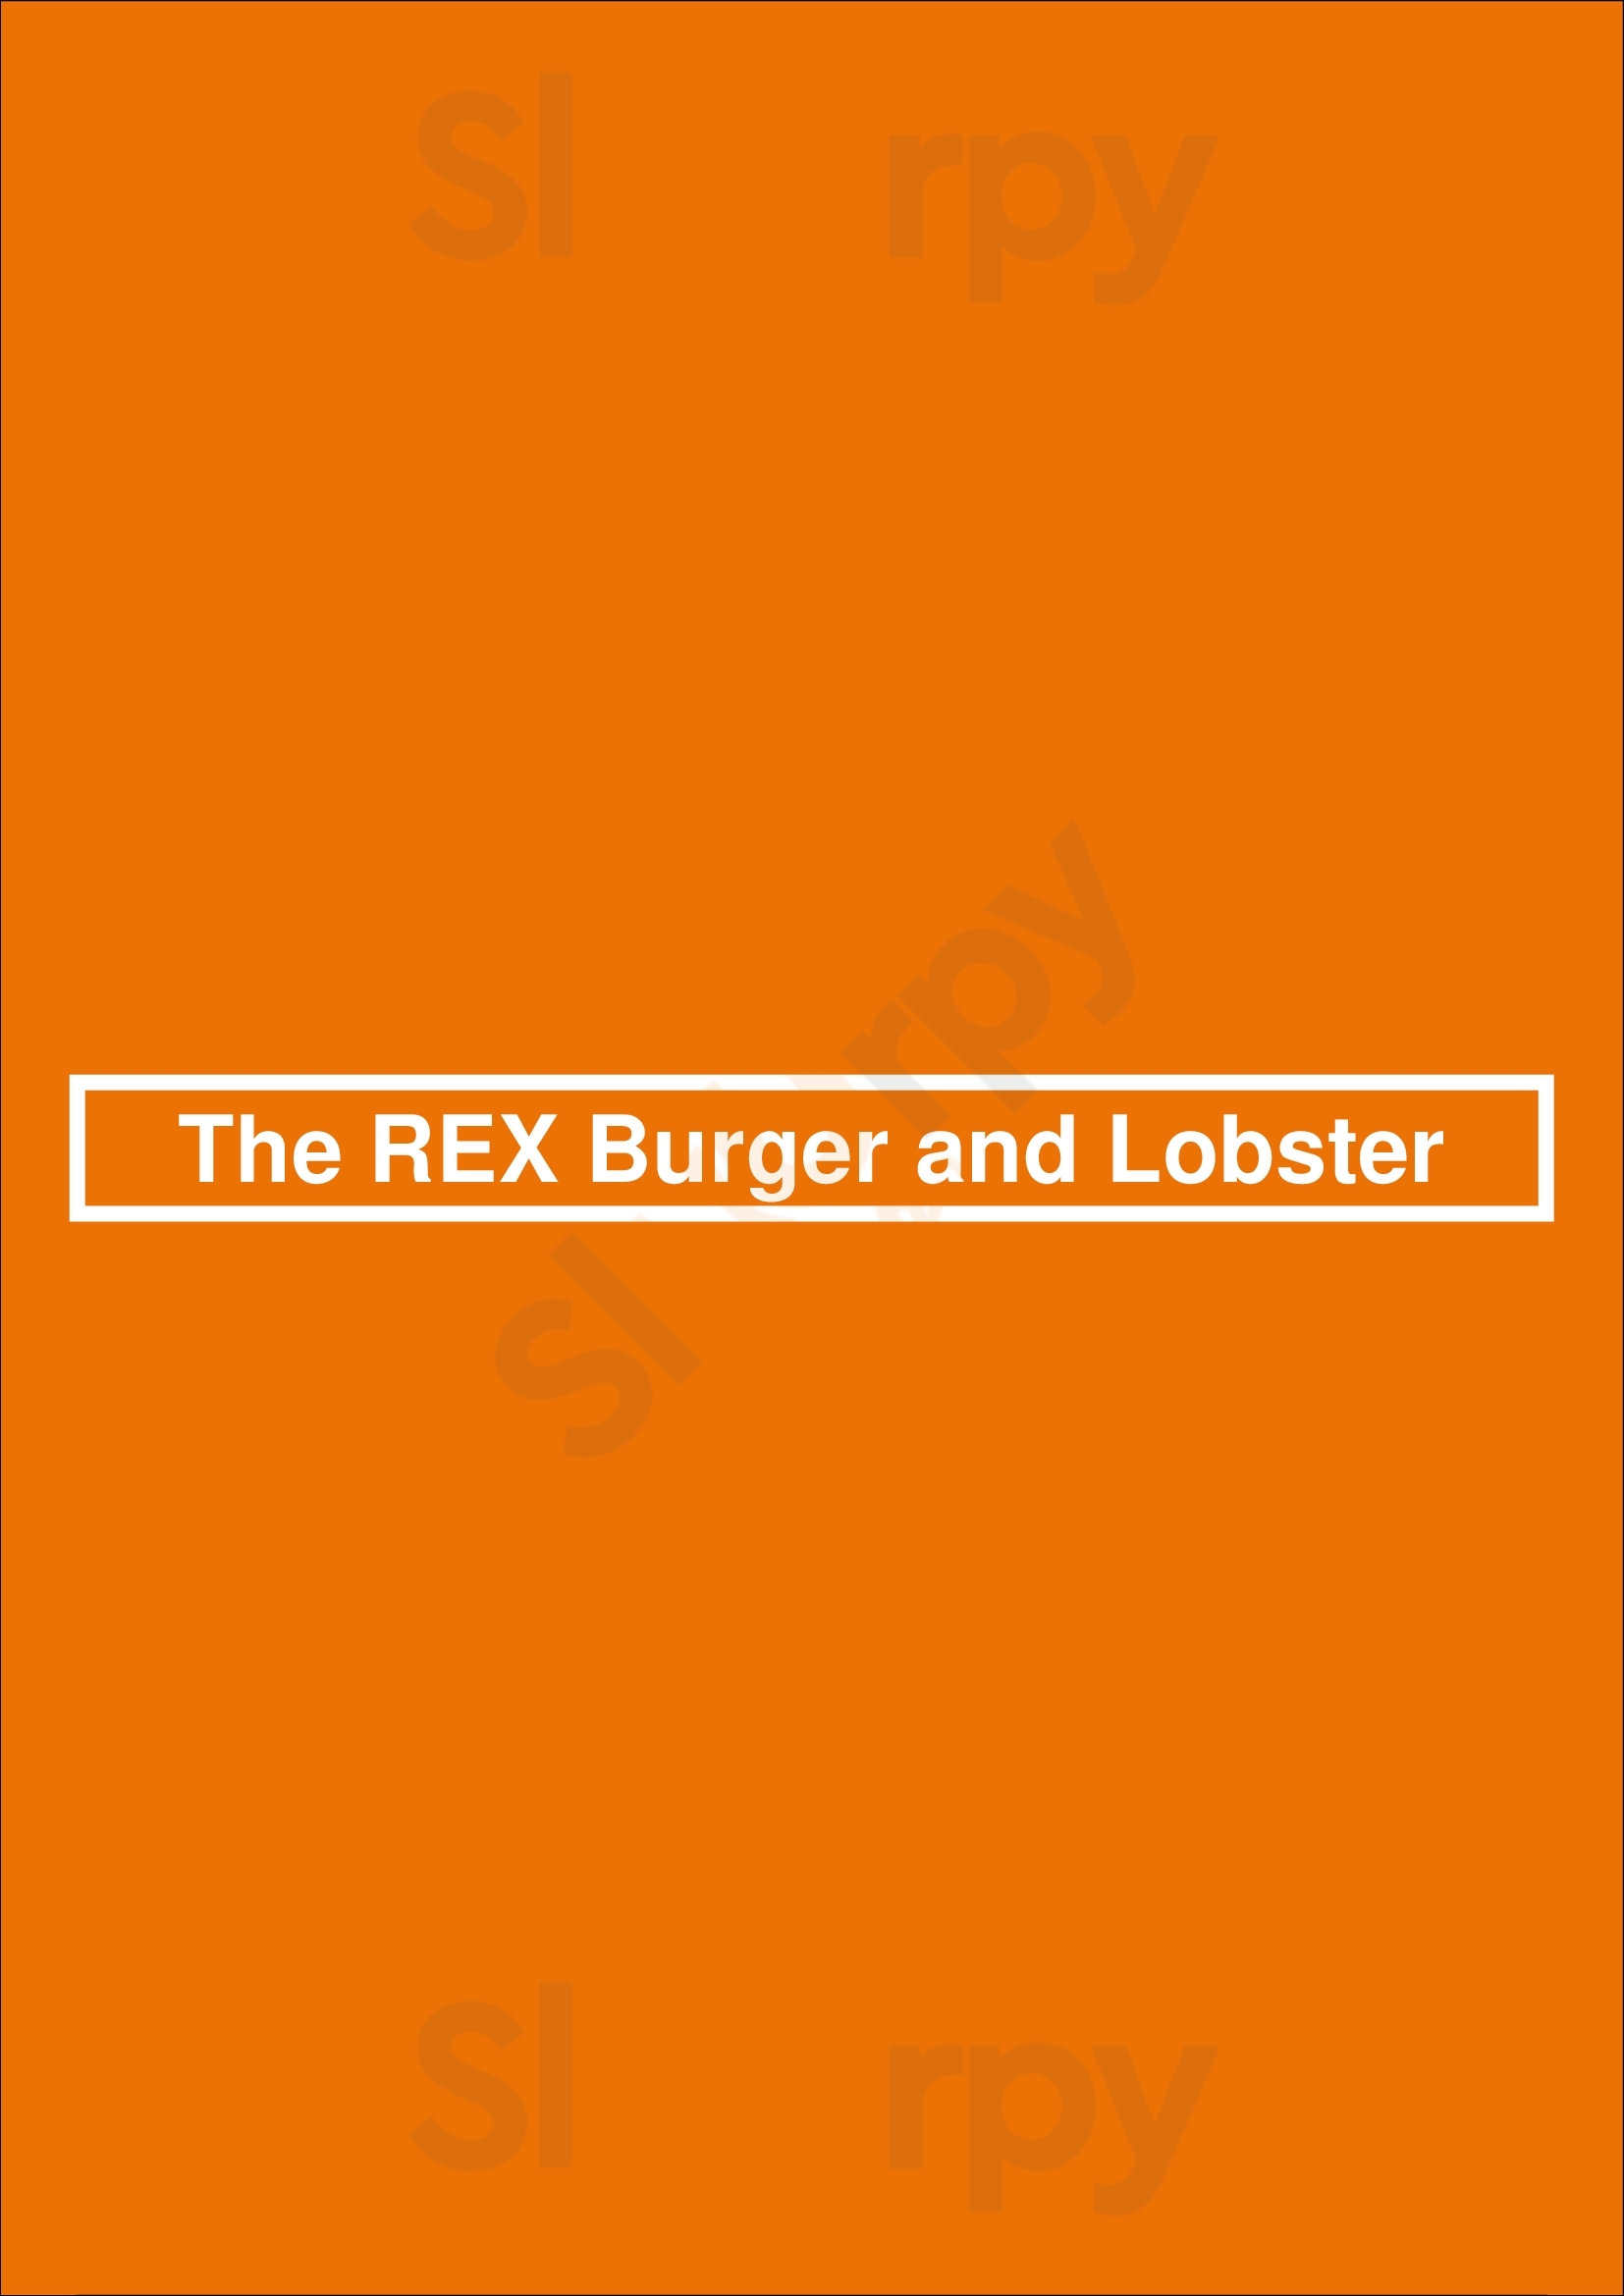 The Rex Burger And Lobster Mineola Menu - 1